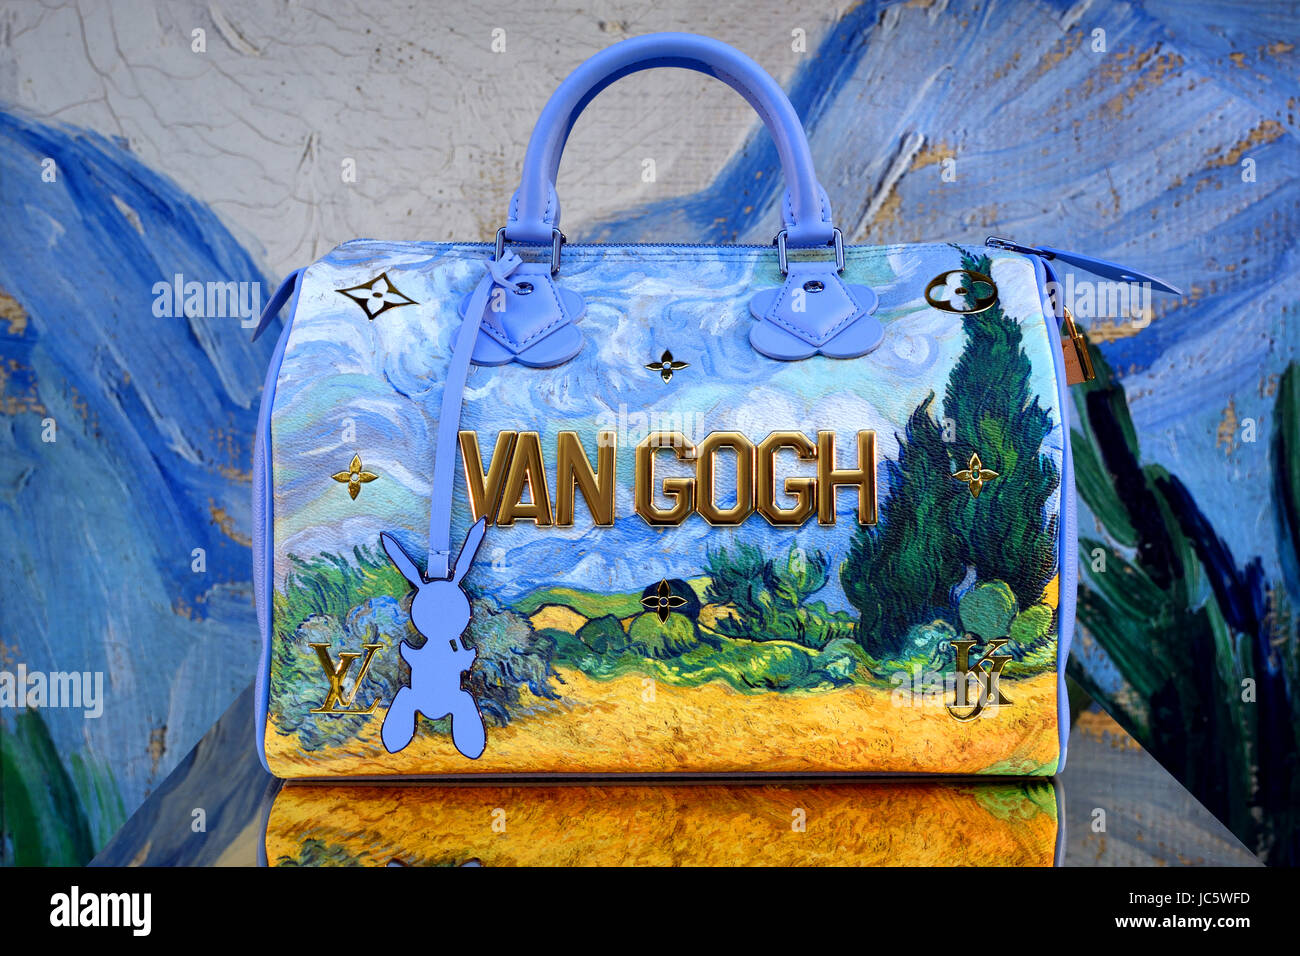 Van Gogh Lv Bag Store - capacit.com.py 1691932336